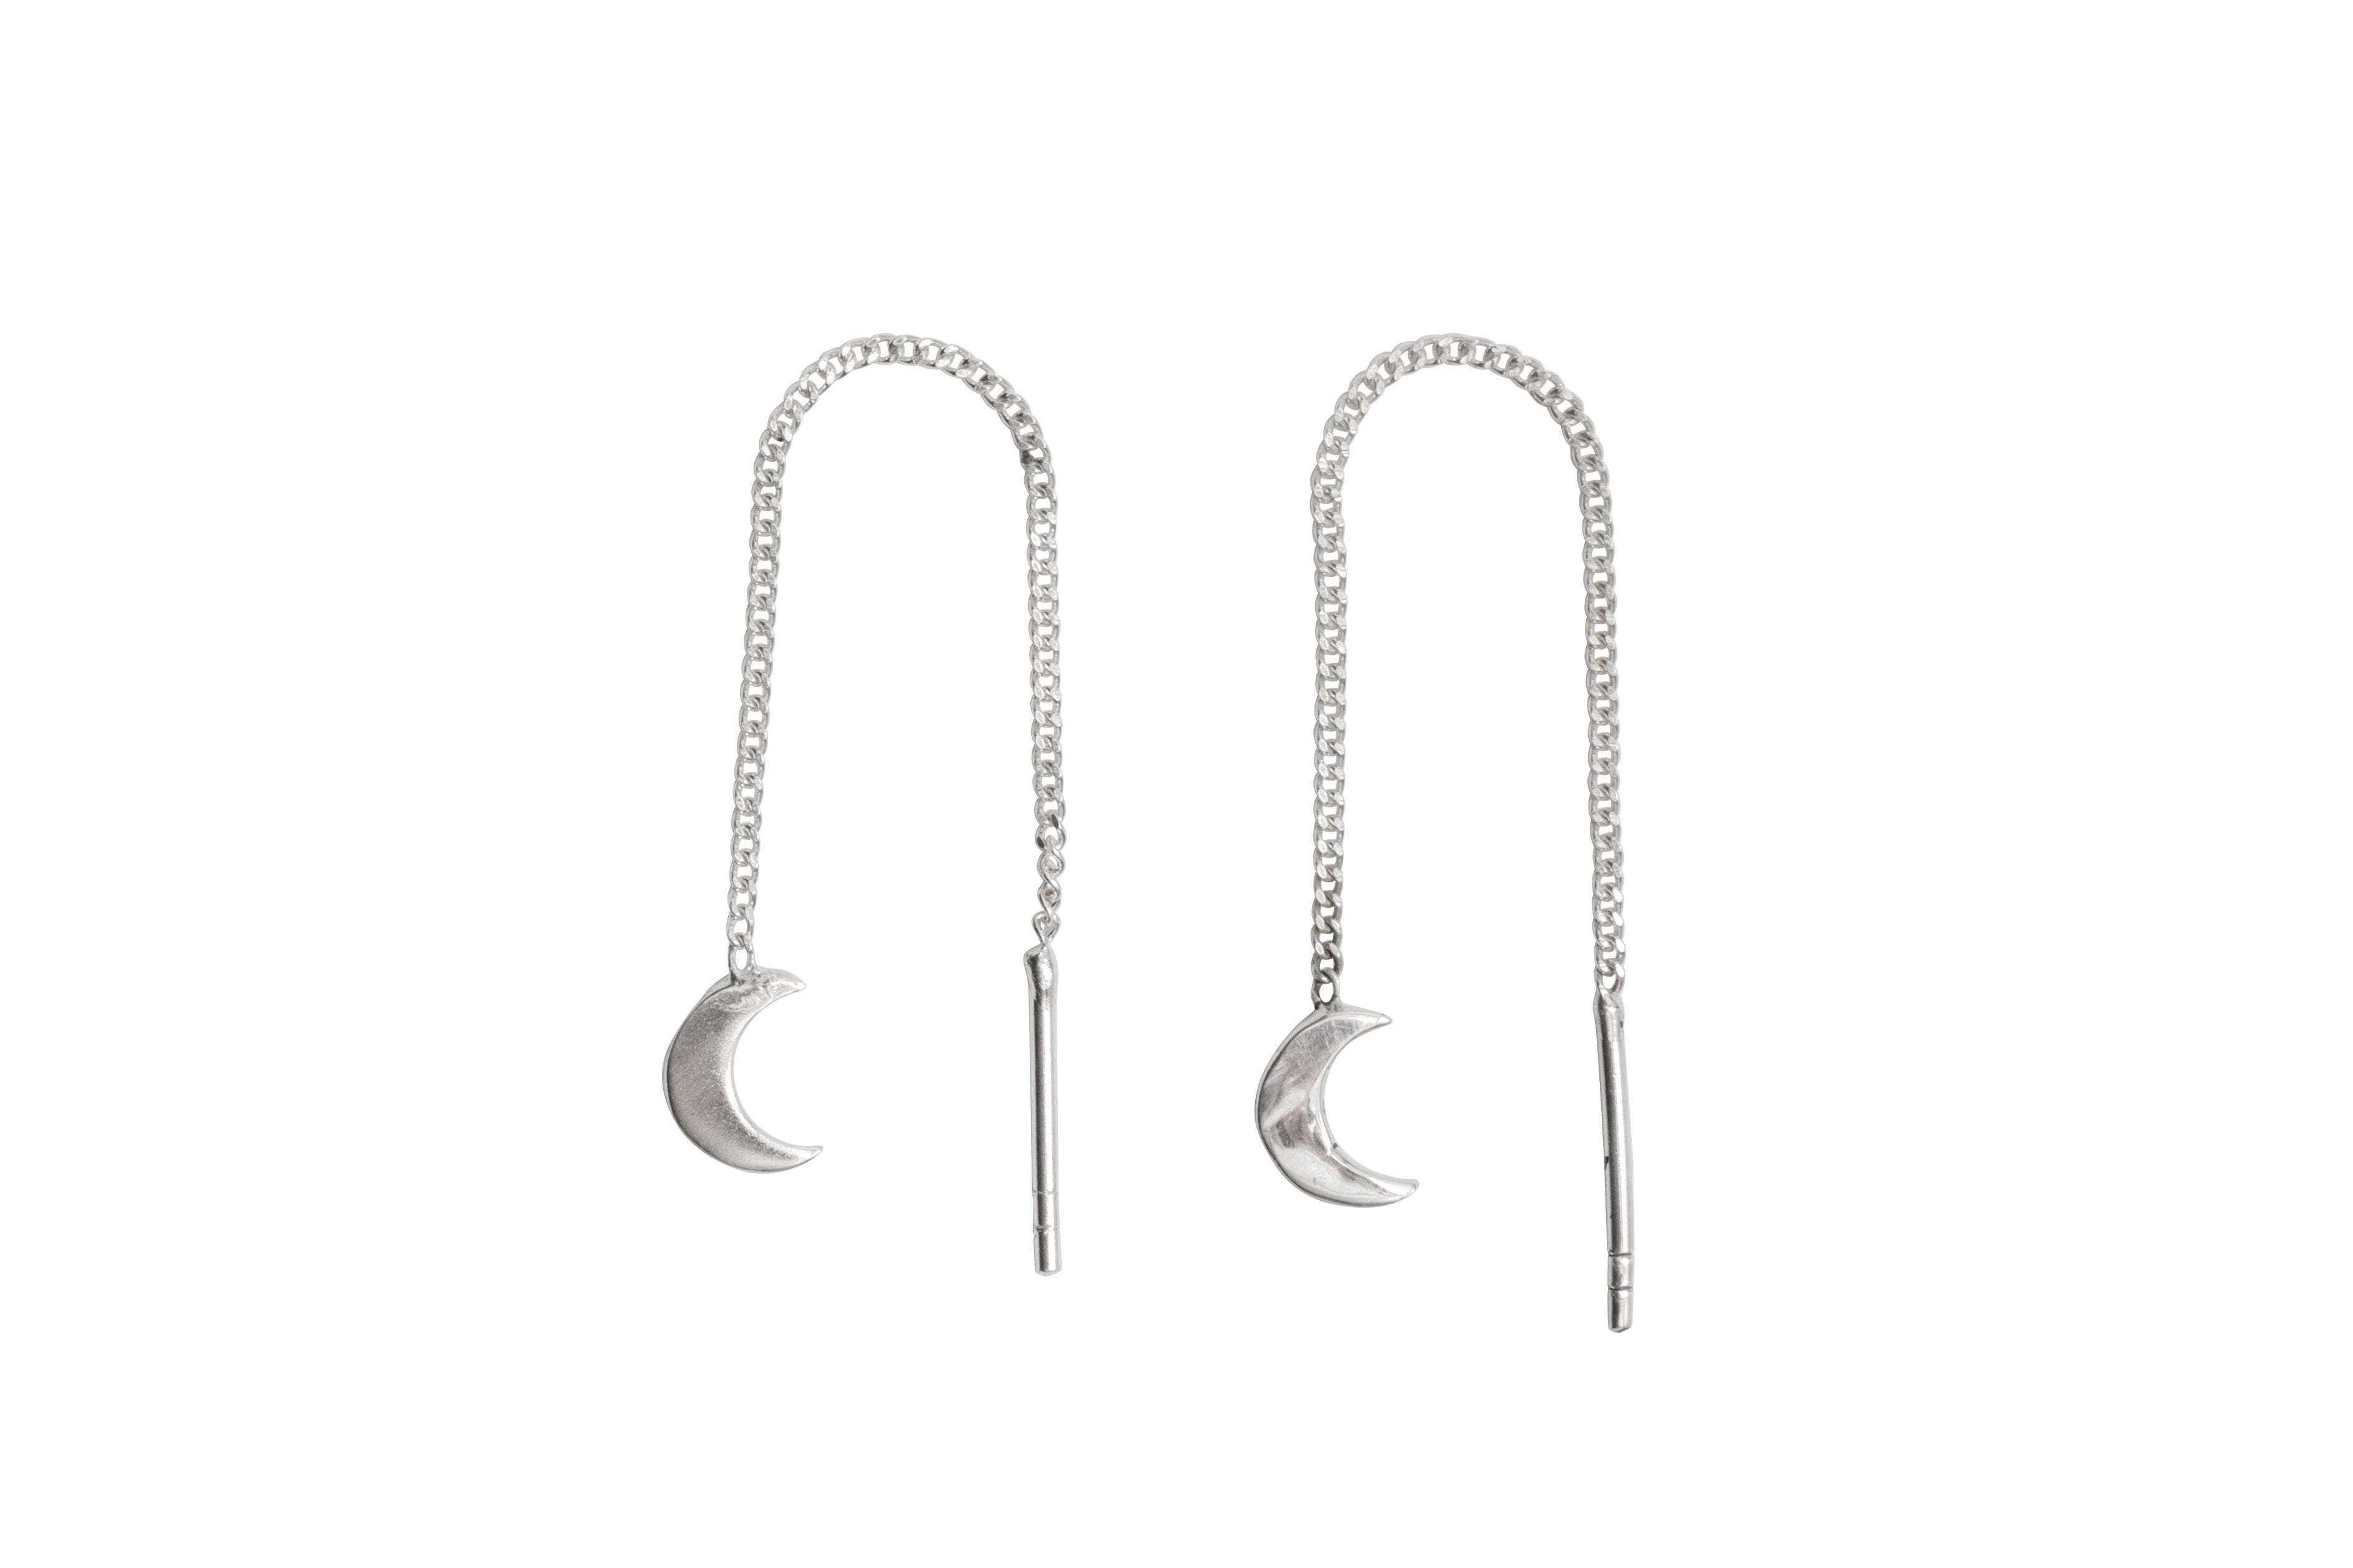 Threaded moon earrings